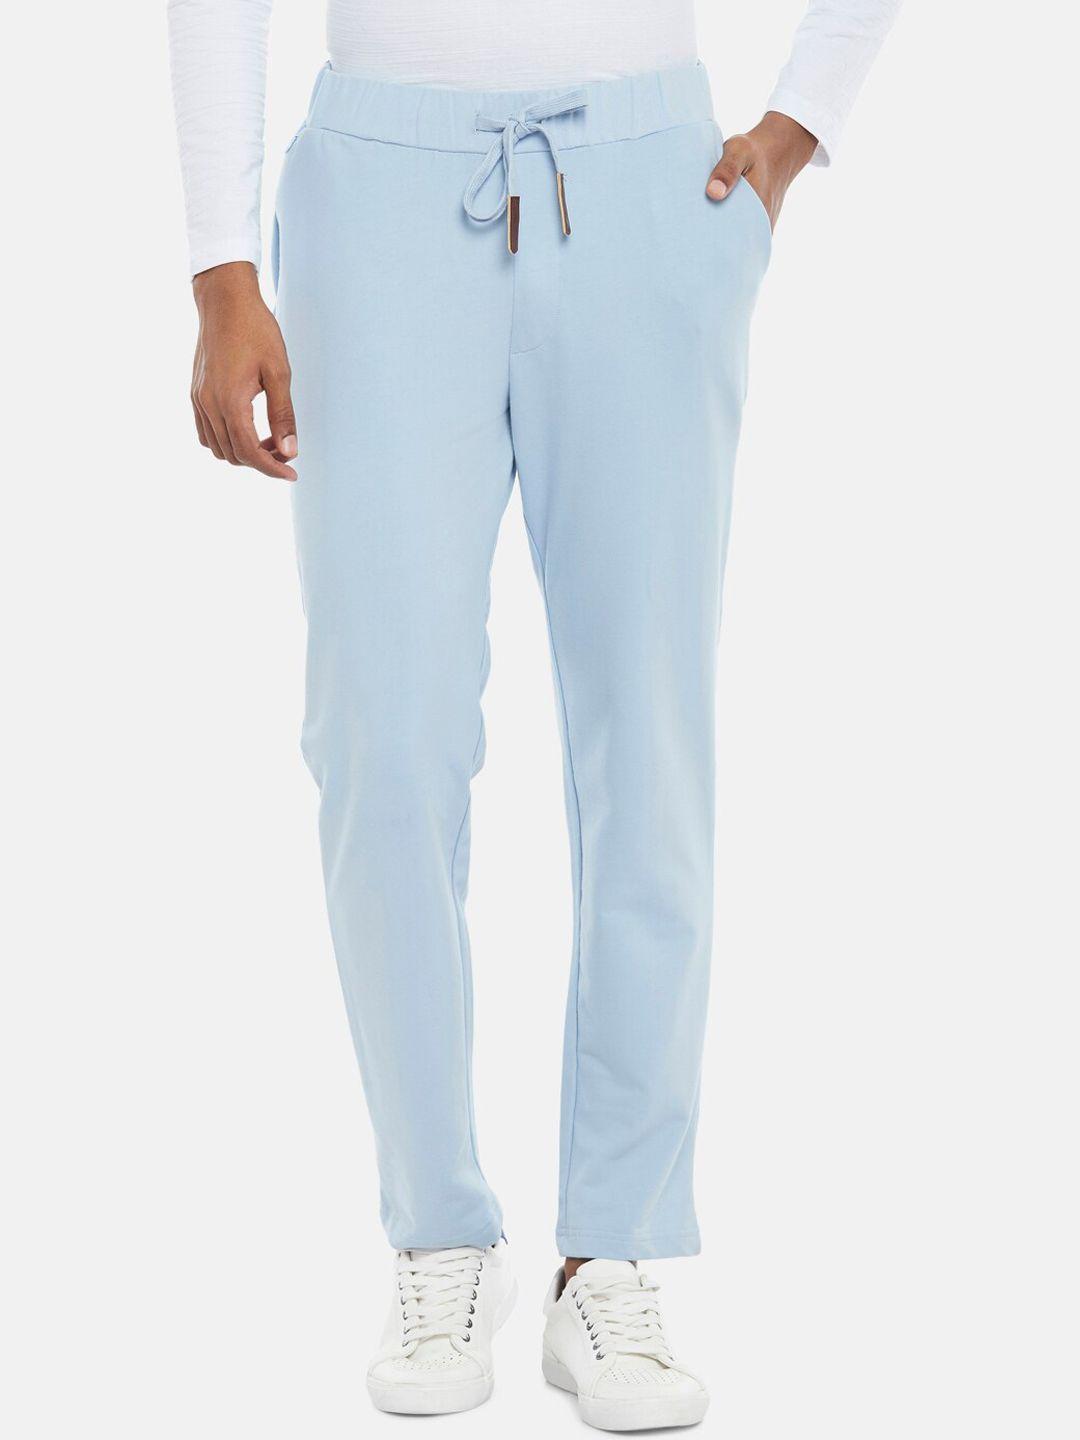 urban ranger by pantaloons men blue slim fit trousers